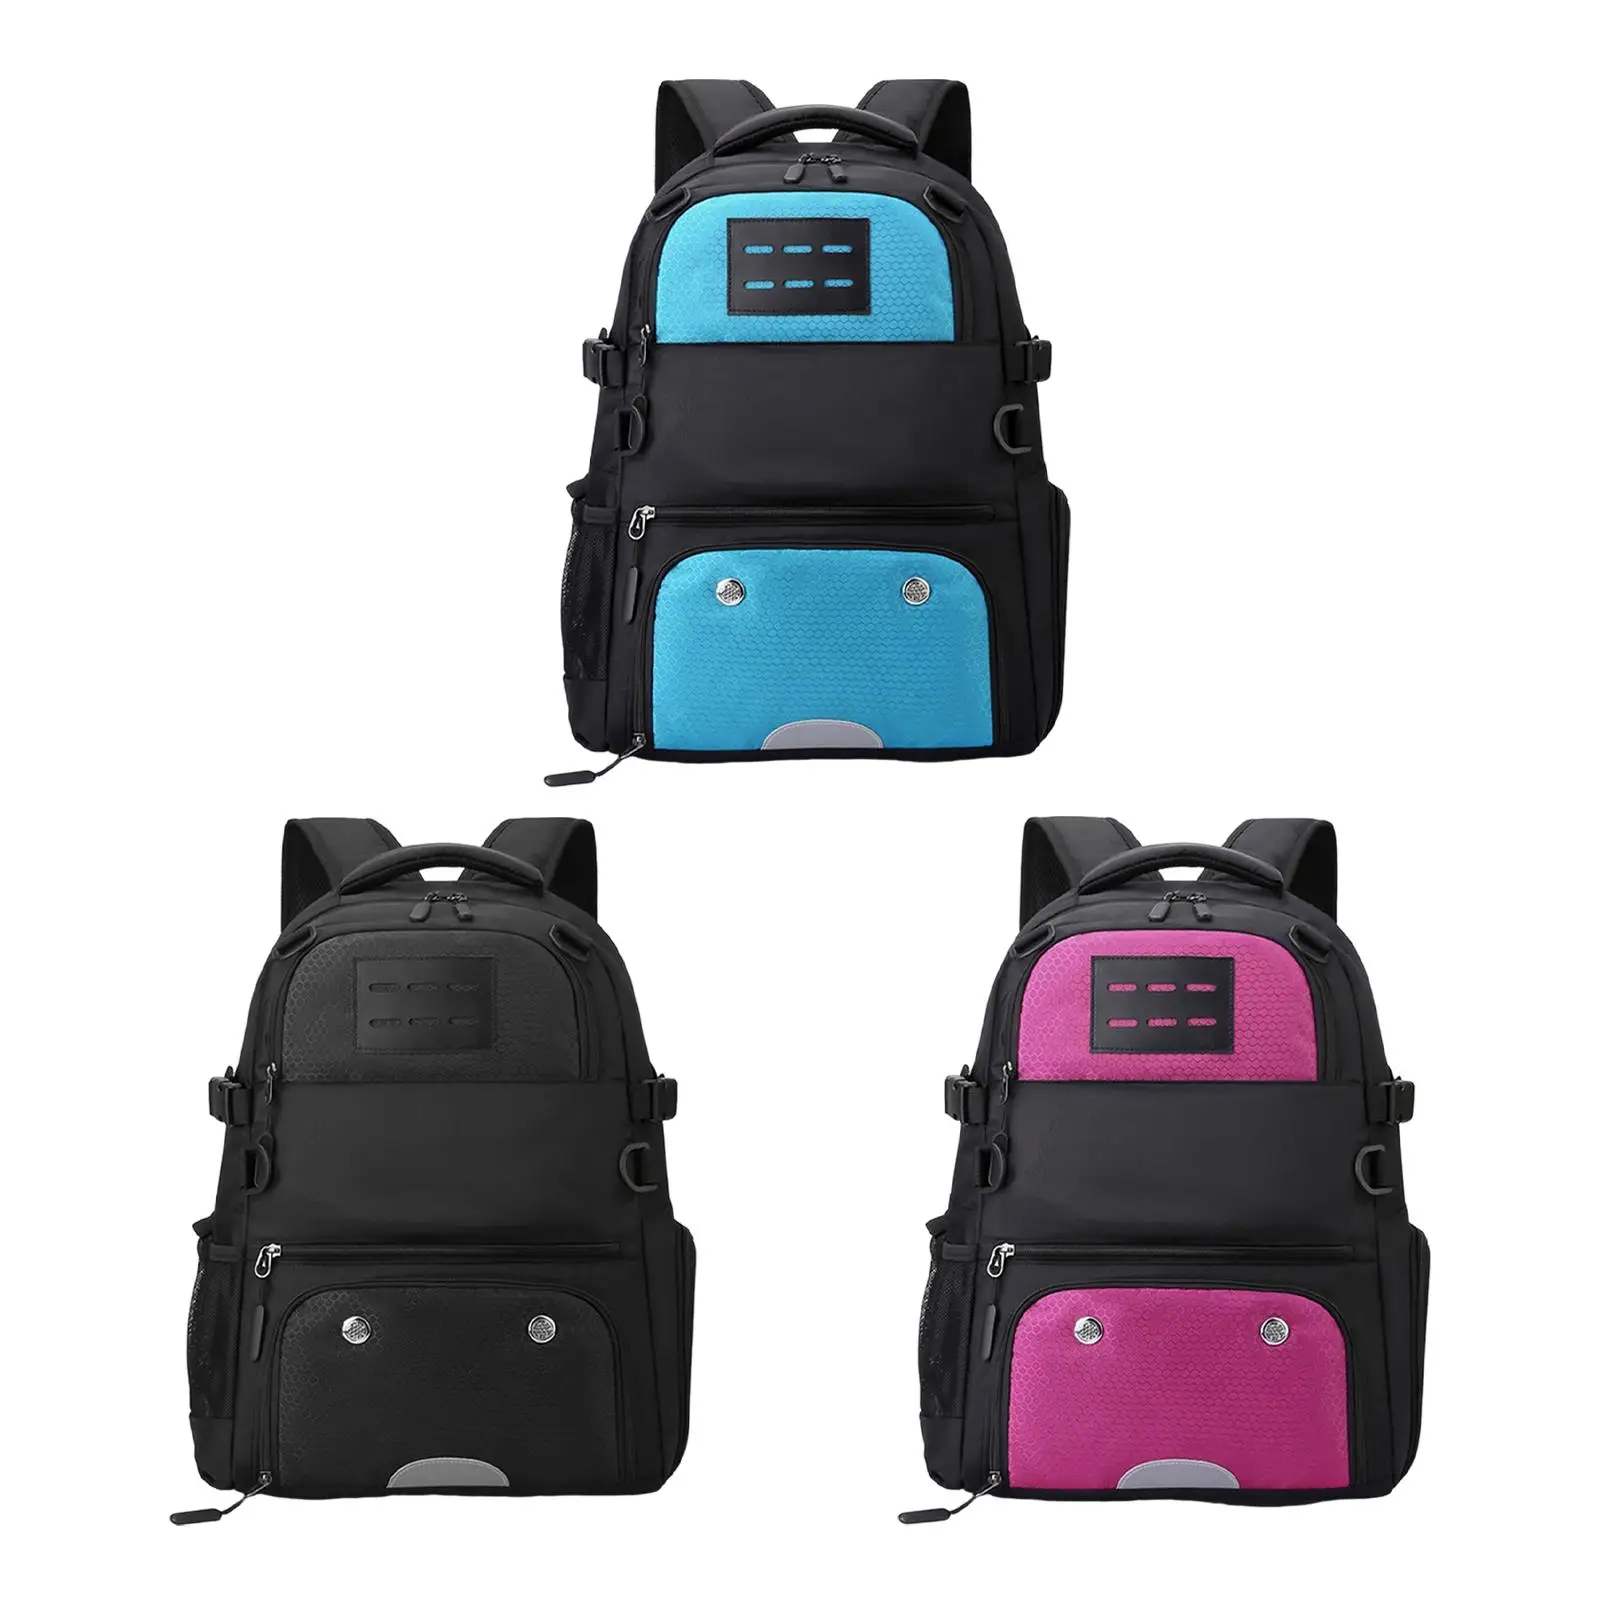 Basketball Football Backpack Pocket Equipment Hiking Bag Daypack Soccer Bag for Volleyball Gym Sports Fitness Girls